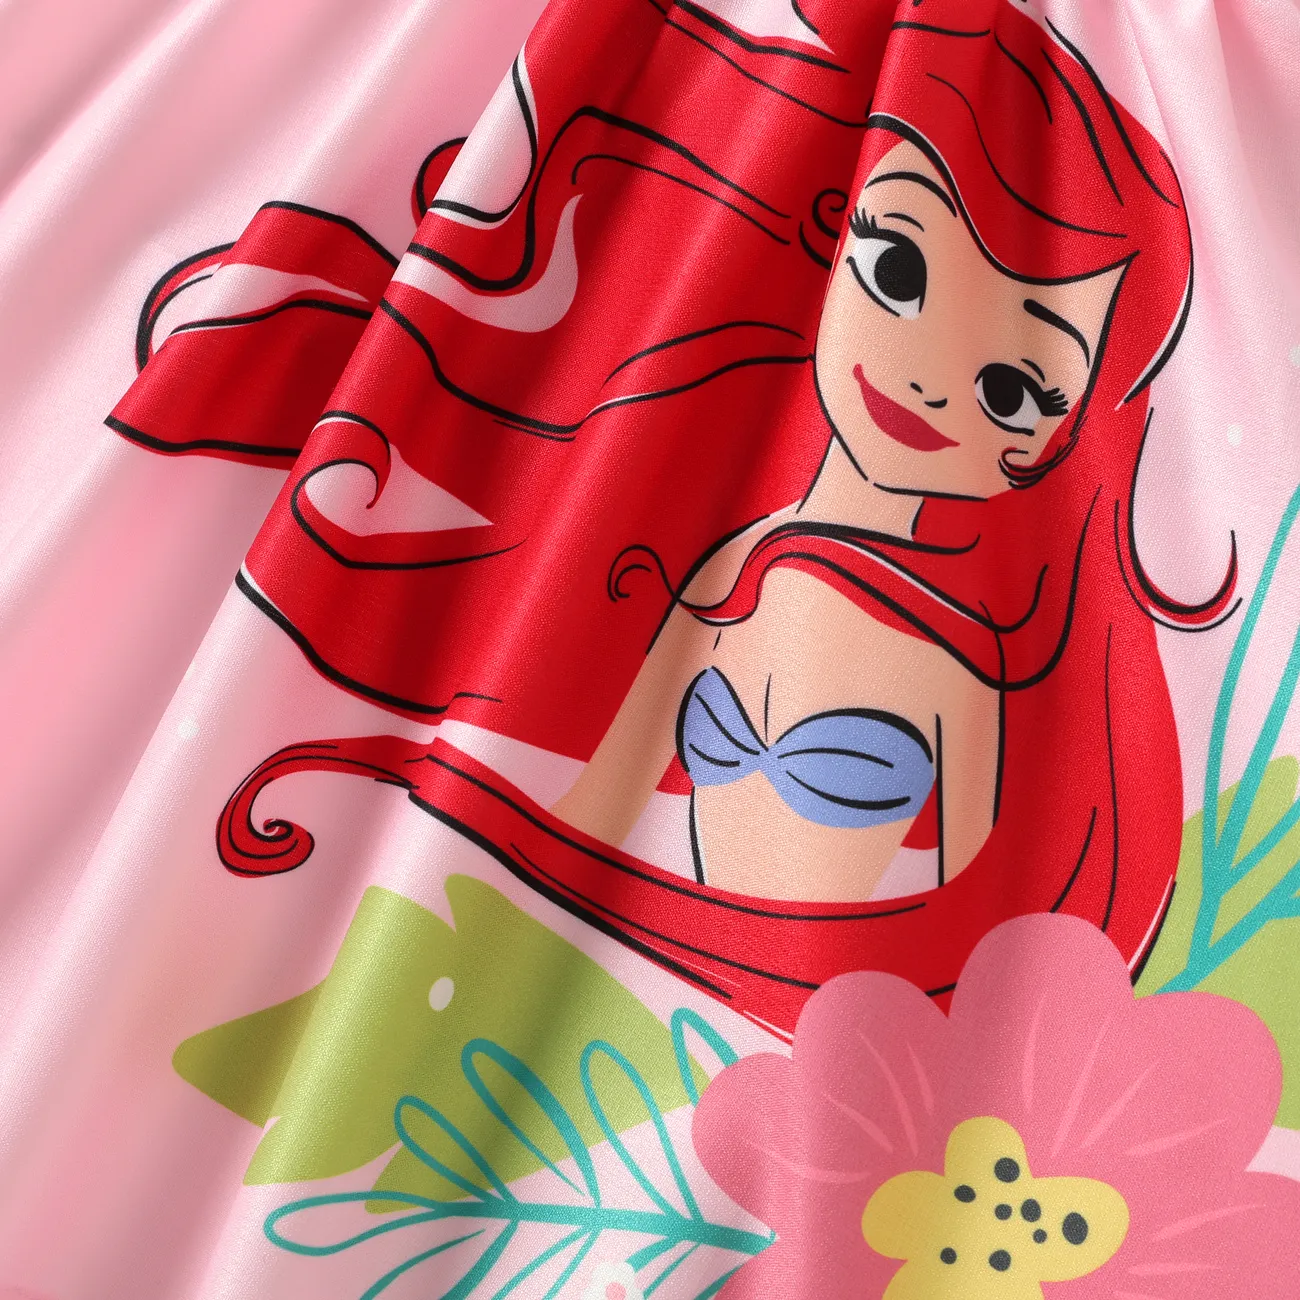 Disney Princess Toddler Girl Character Print Smocking Dress
 Pink big image 1